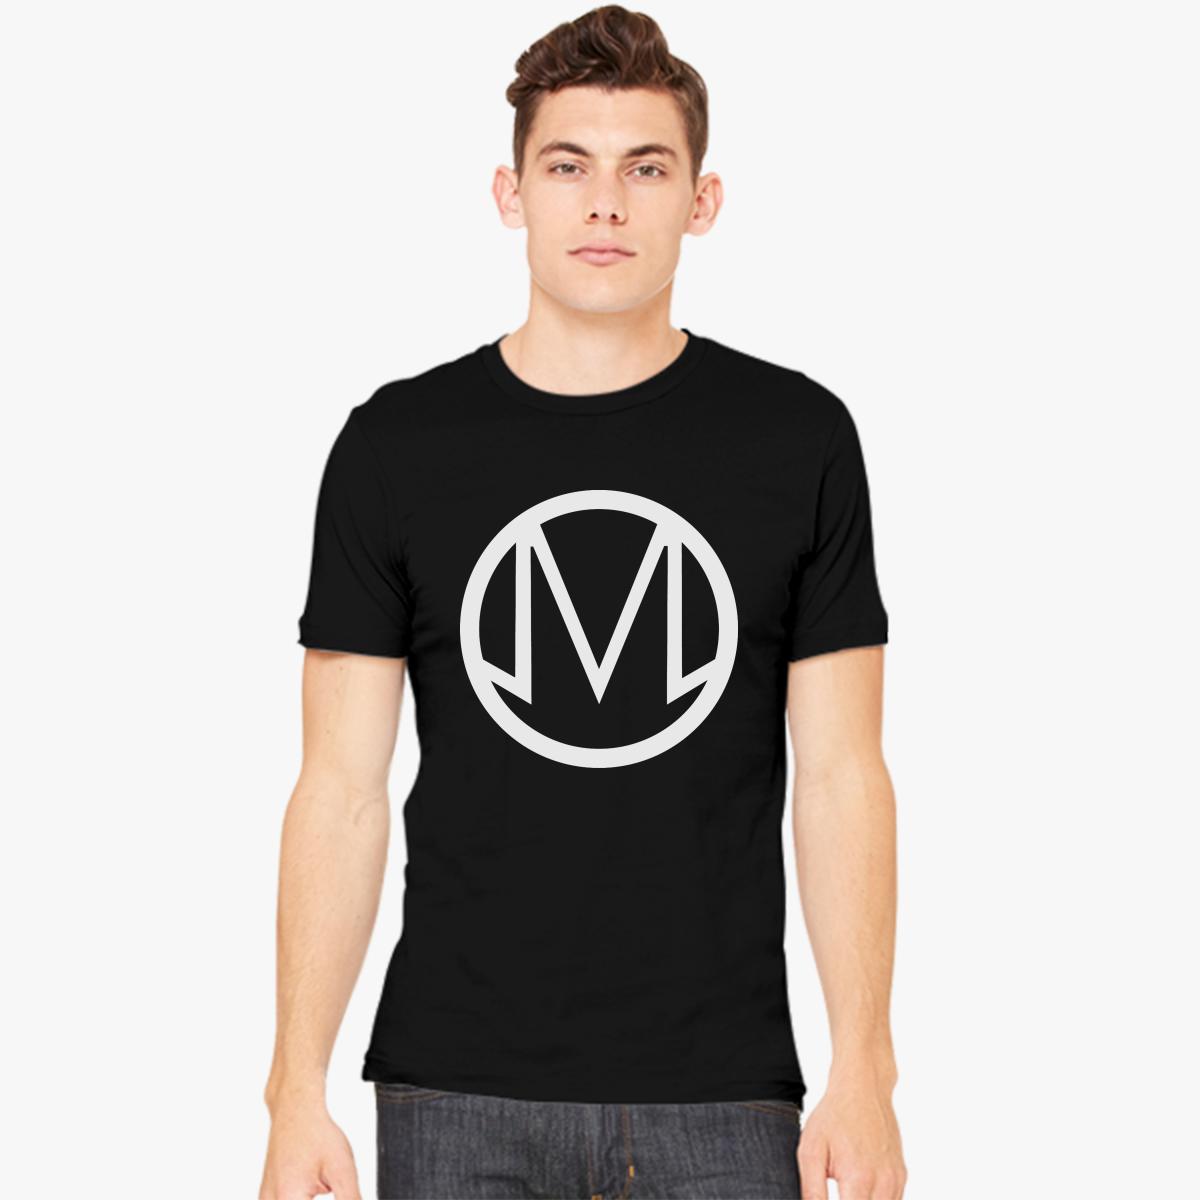 OurMineLogo Men's T-shirt